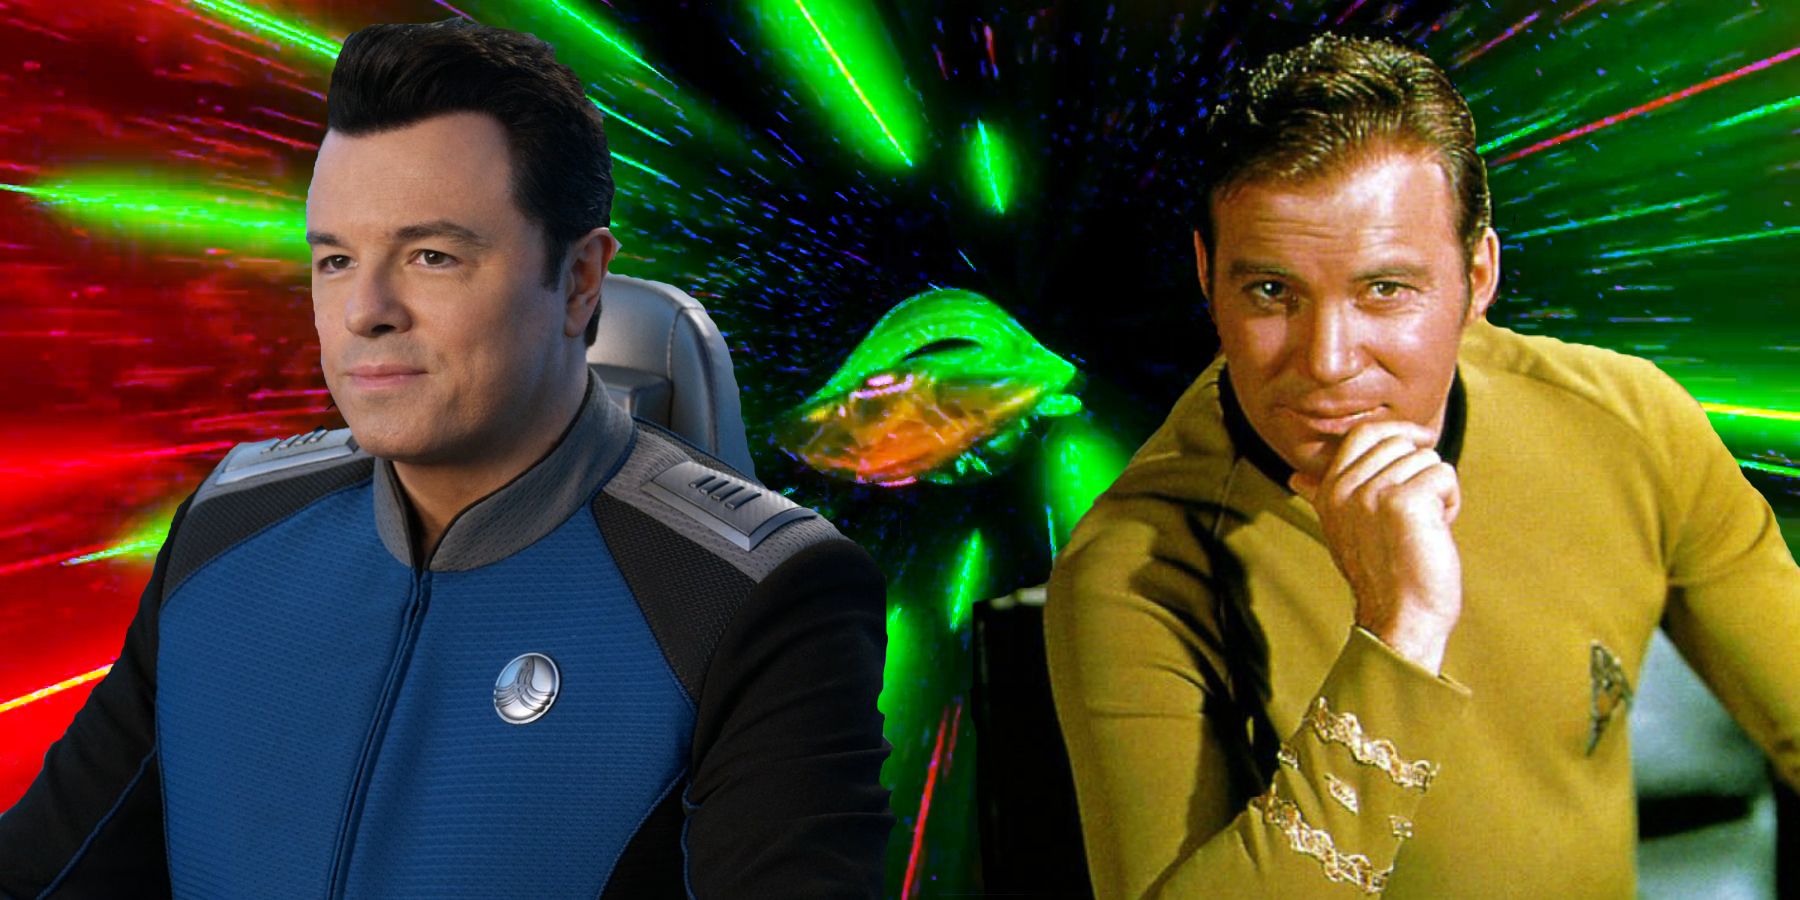 Seth MacFarlane as Captain Ed Mercer in The Orville and William Shatner as Captain Kirk in Star Trek: The Original Series